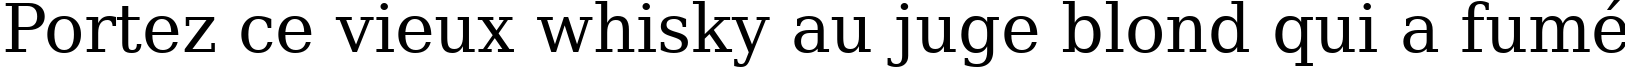 Пример написания шрифтом ae_AlArabiya текста на французском